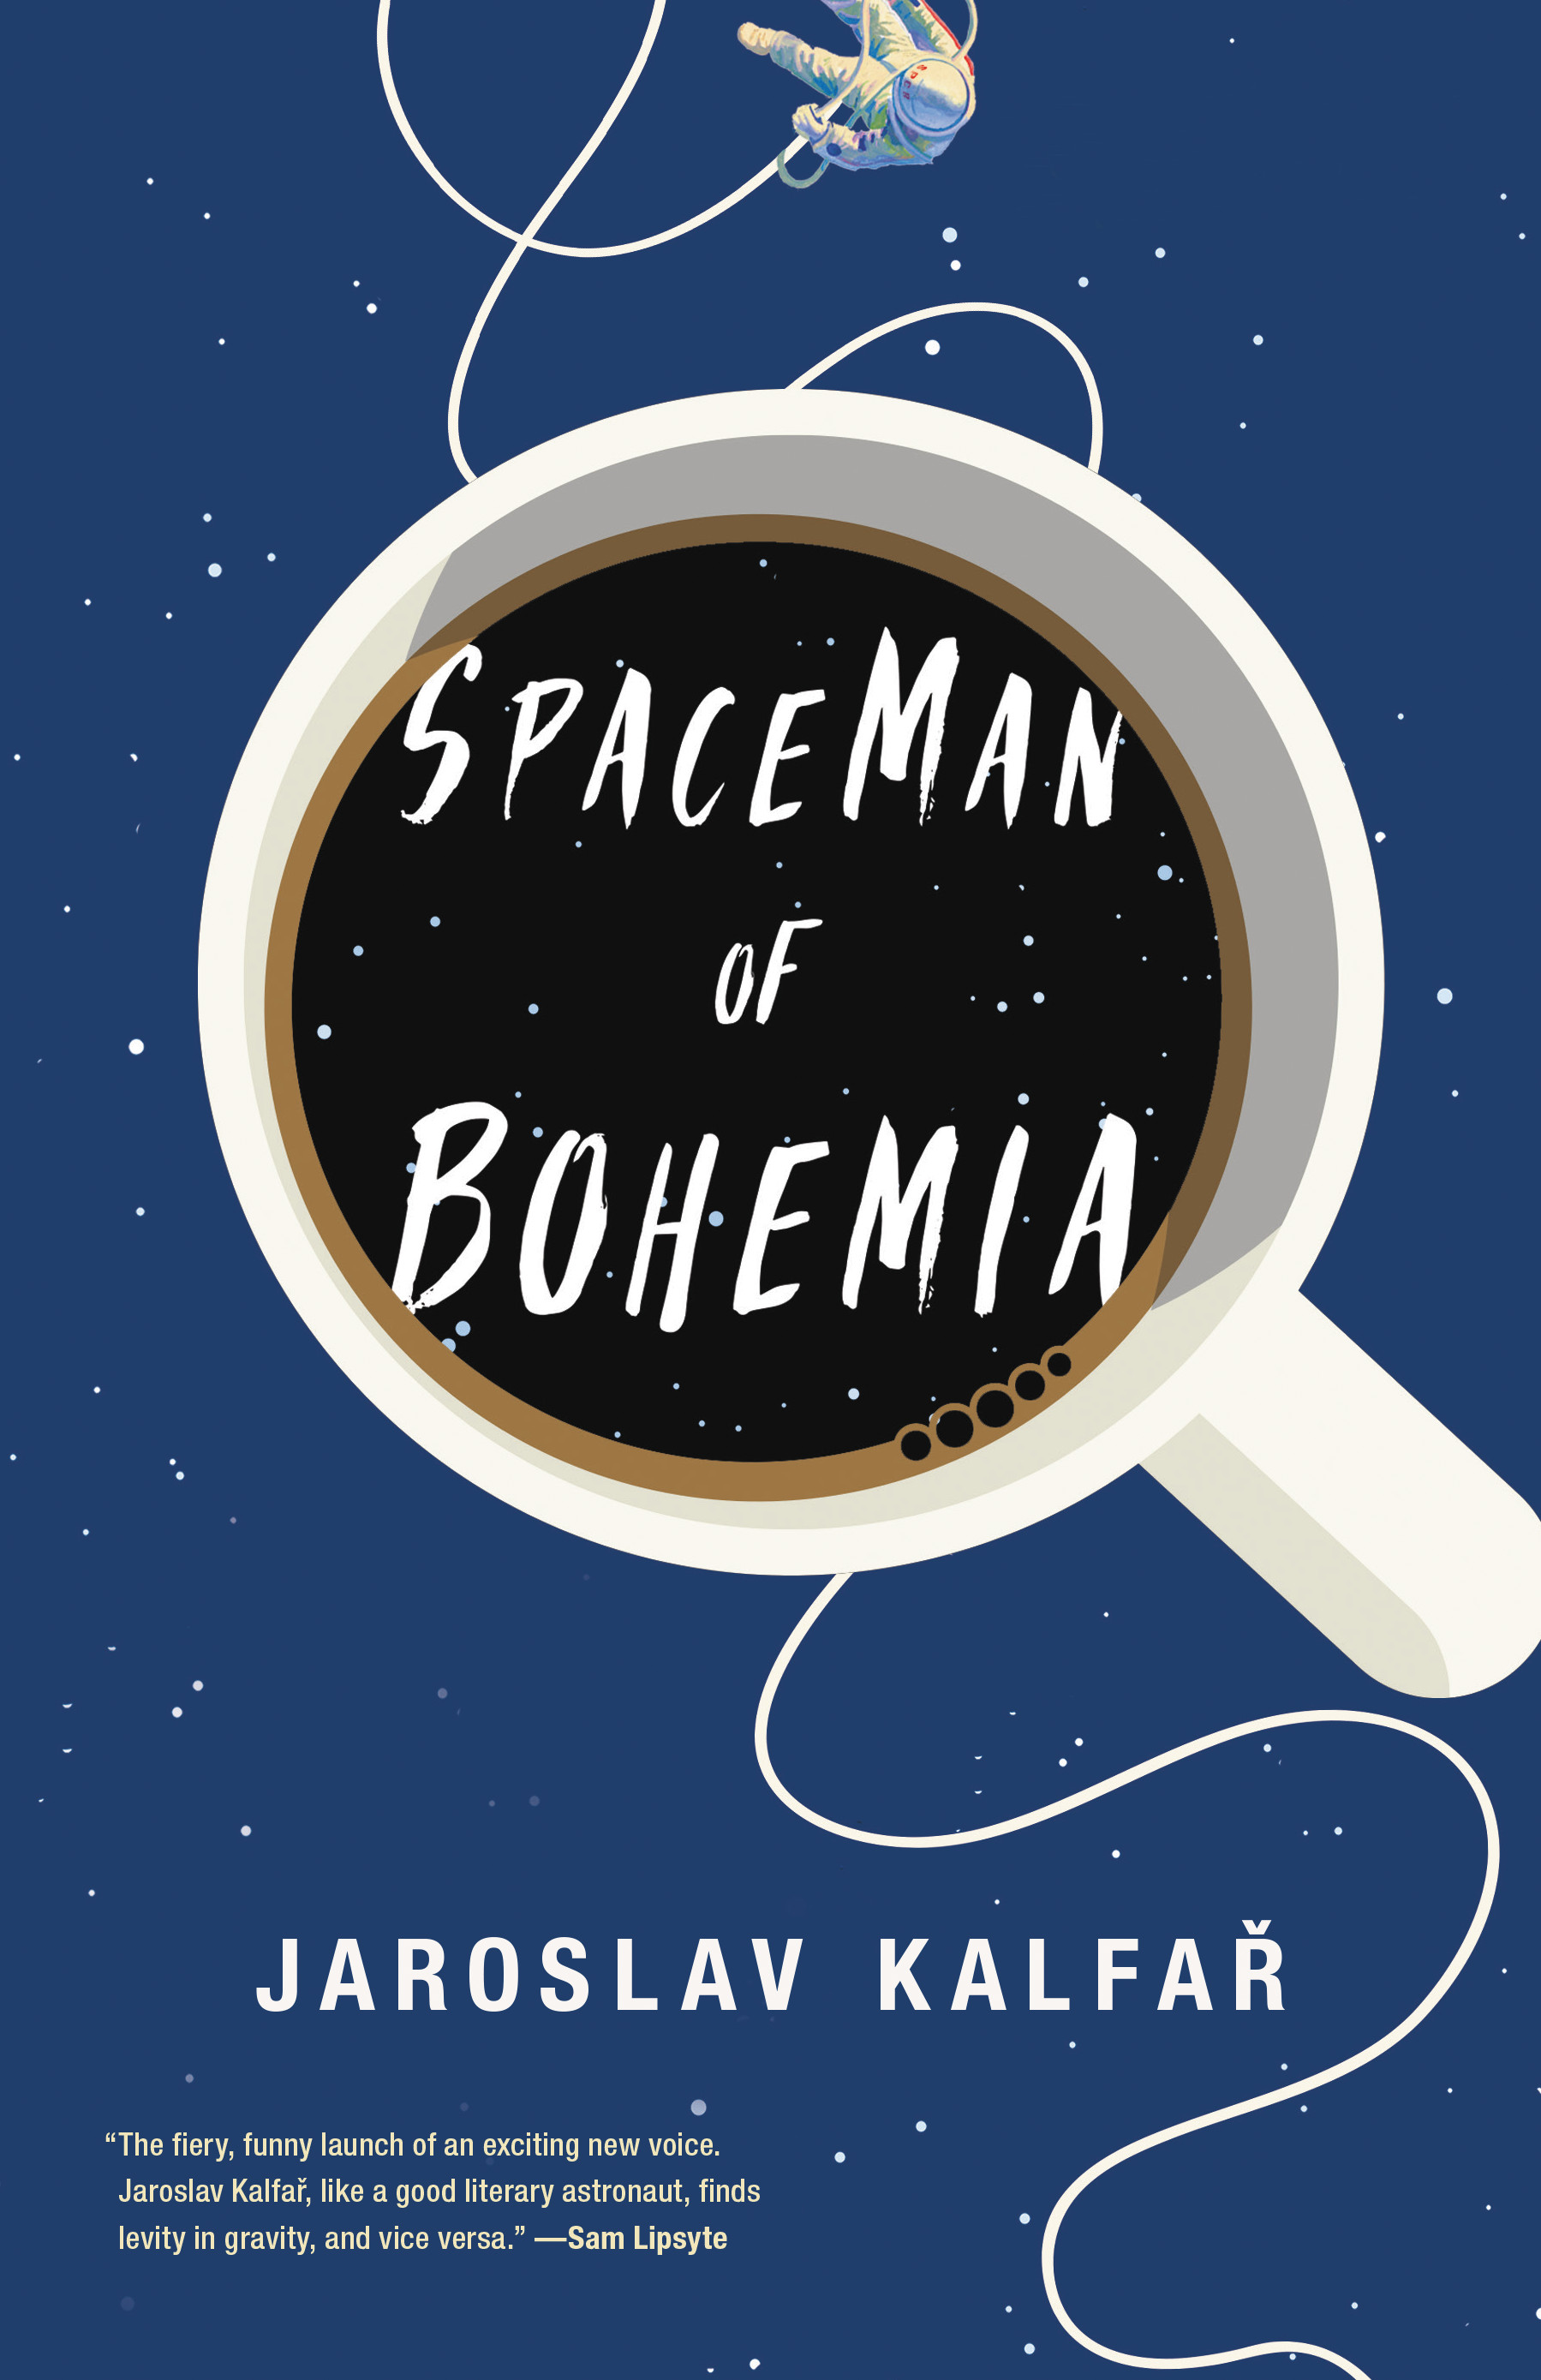 Book Launch: Spaceman of Bohemia by Jaroslav Kalfař with Ryan Britt